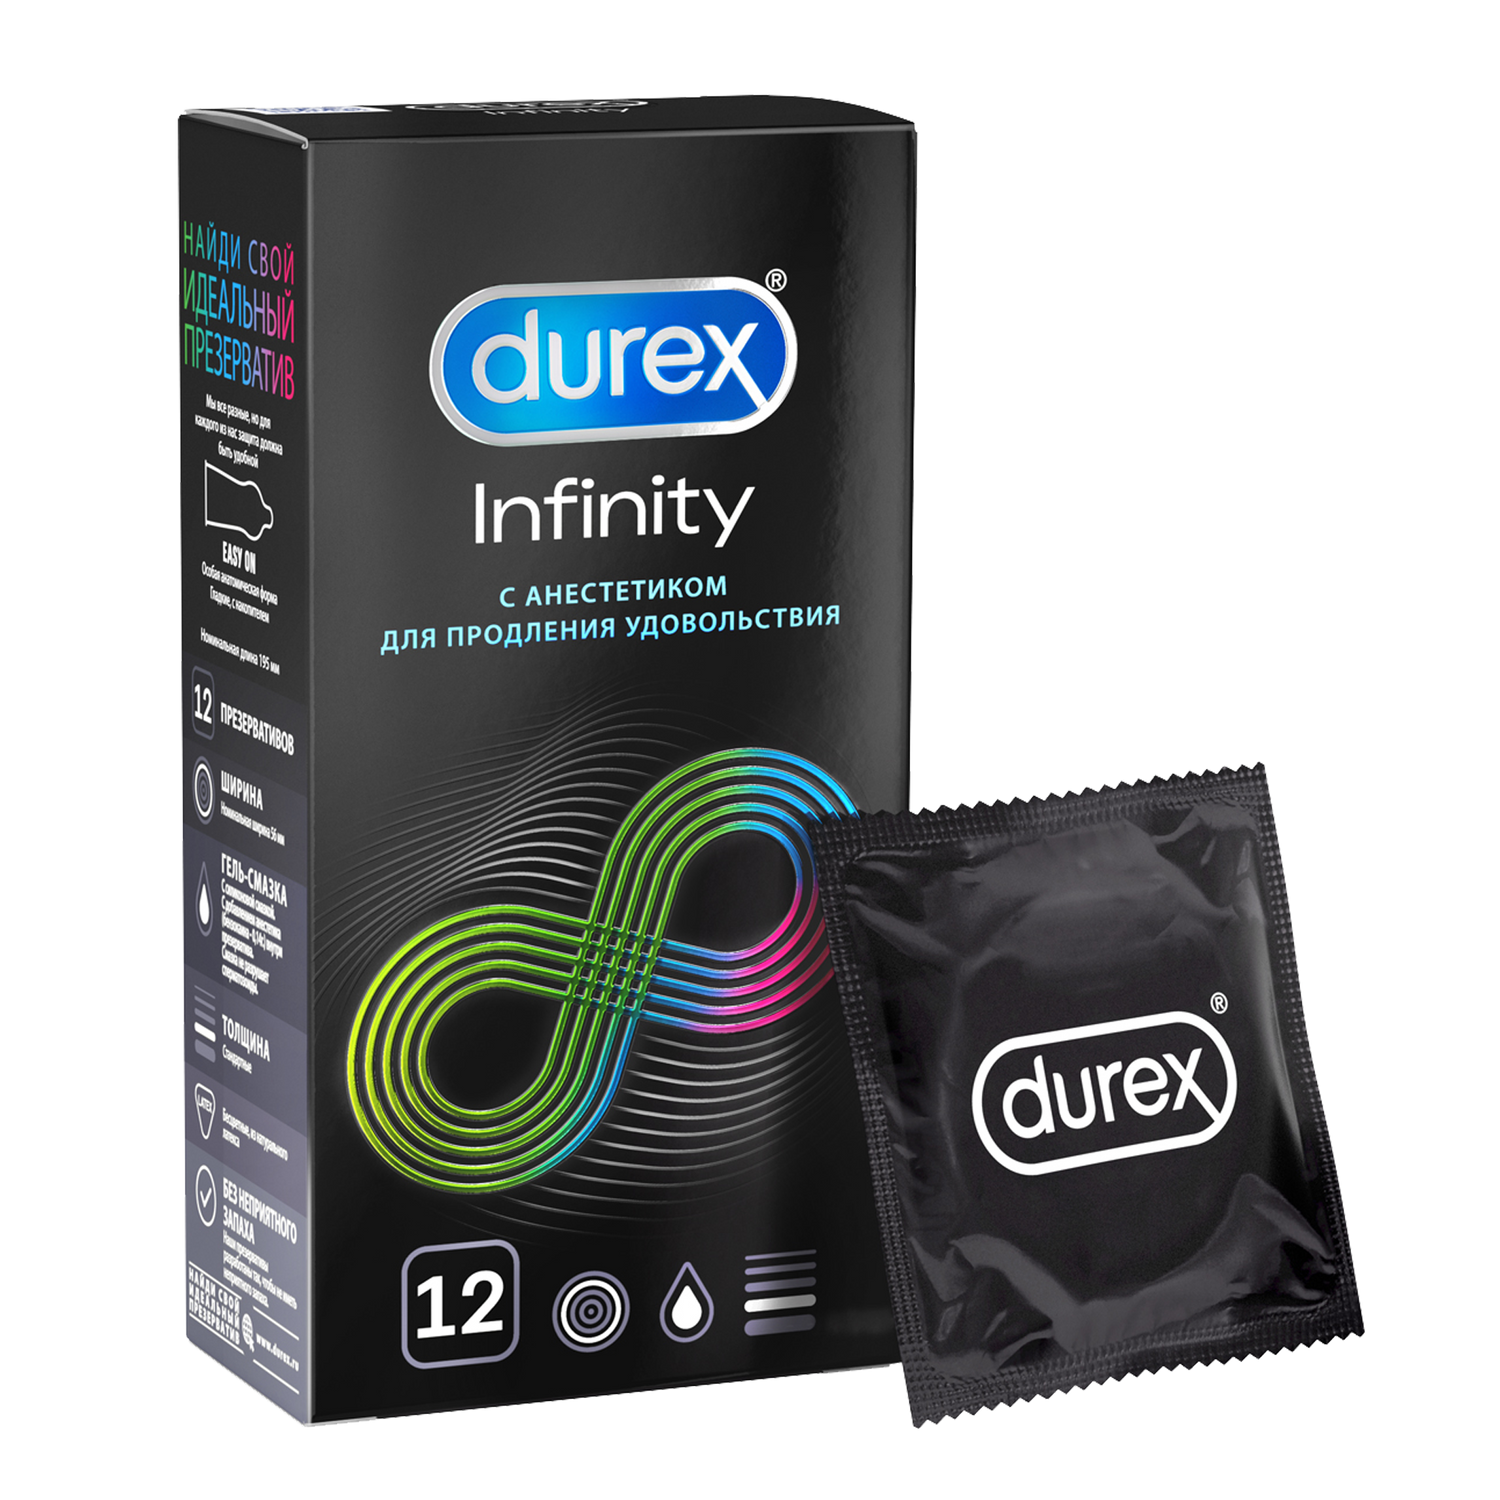 Презервативы Durex Infinity гладкие с анестетиком, 12 шт. одеяло infinity